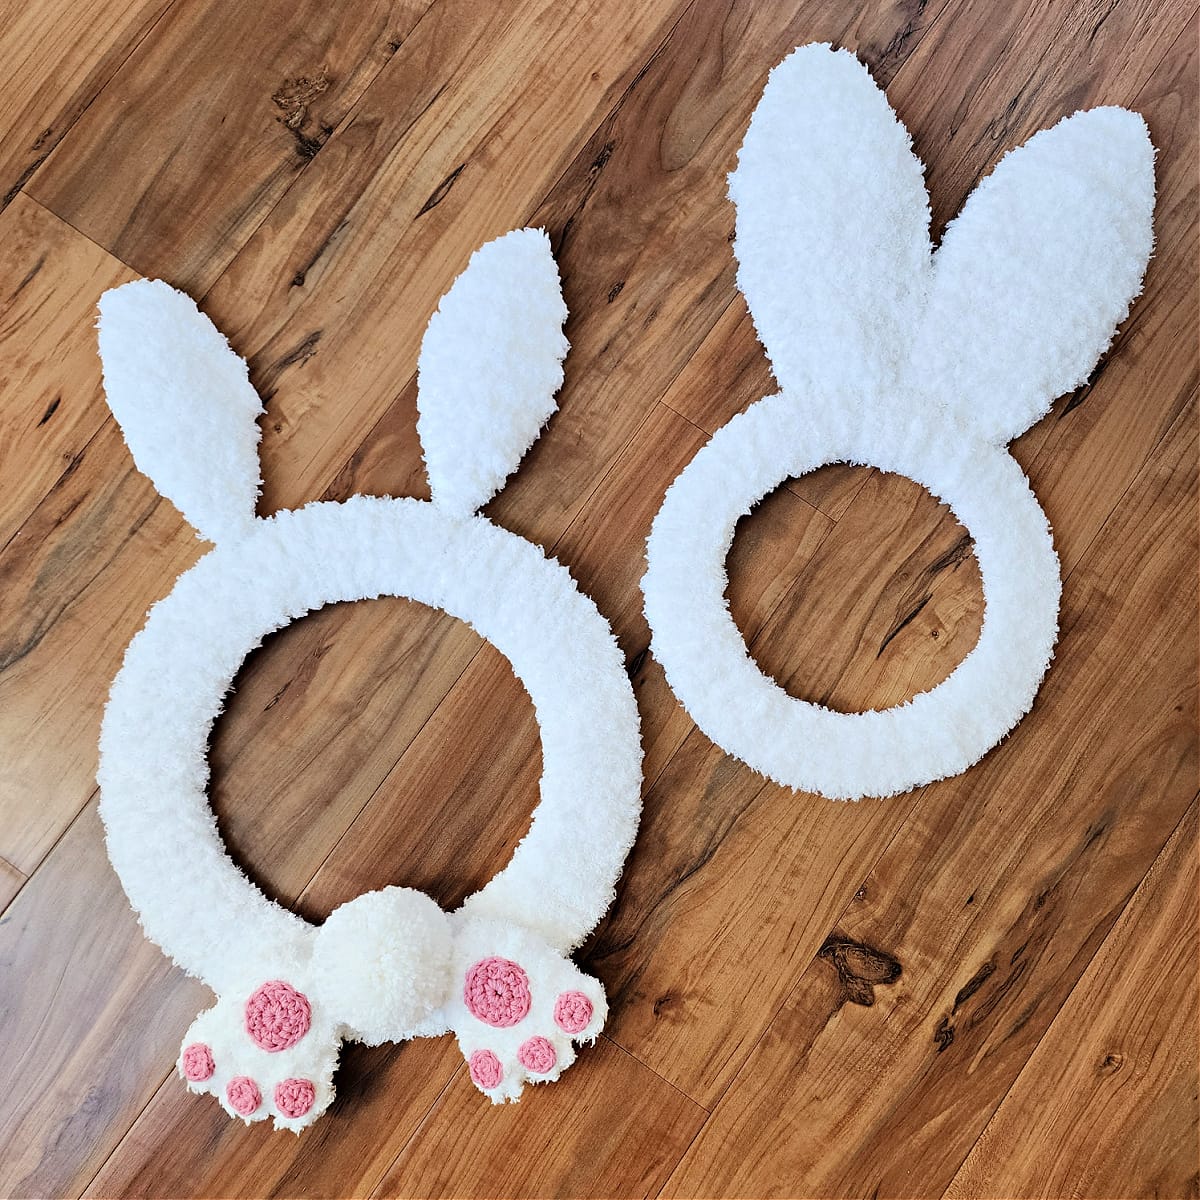 Bunny shaped wreath with crochet bunny feet and crochet bunny ears.